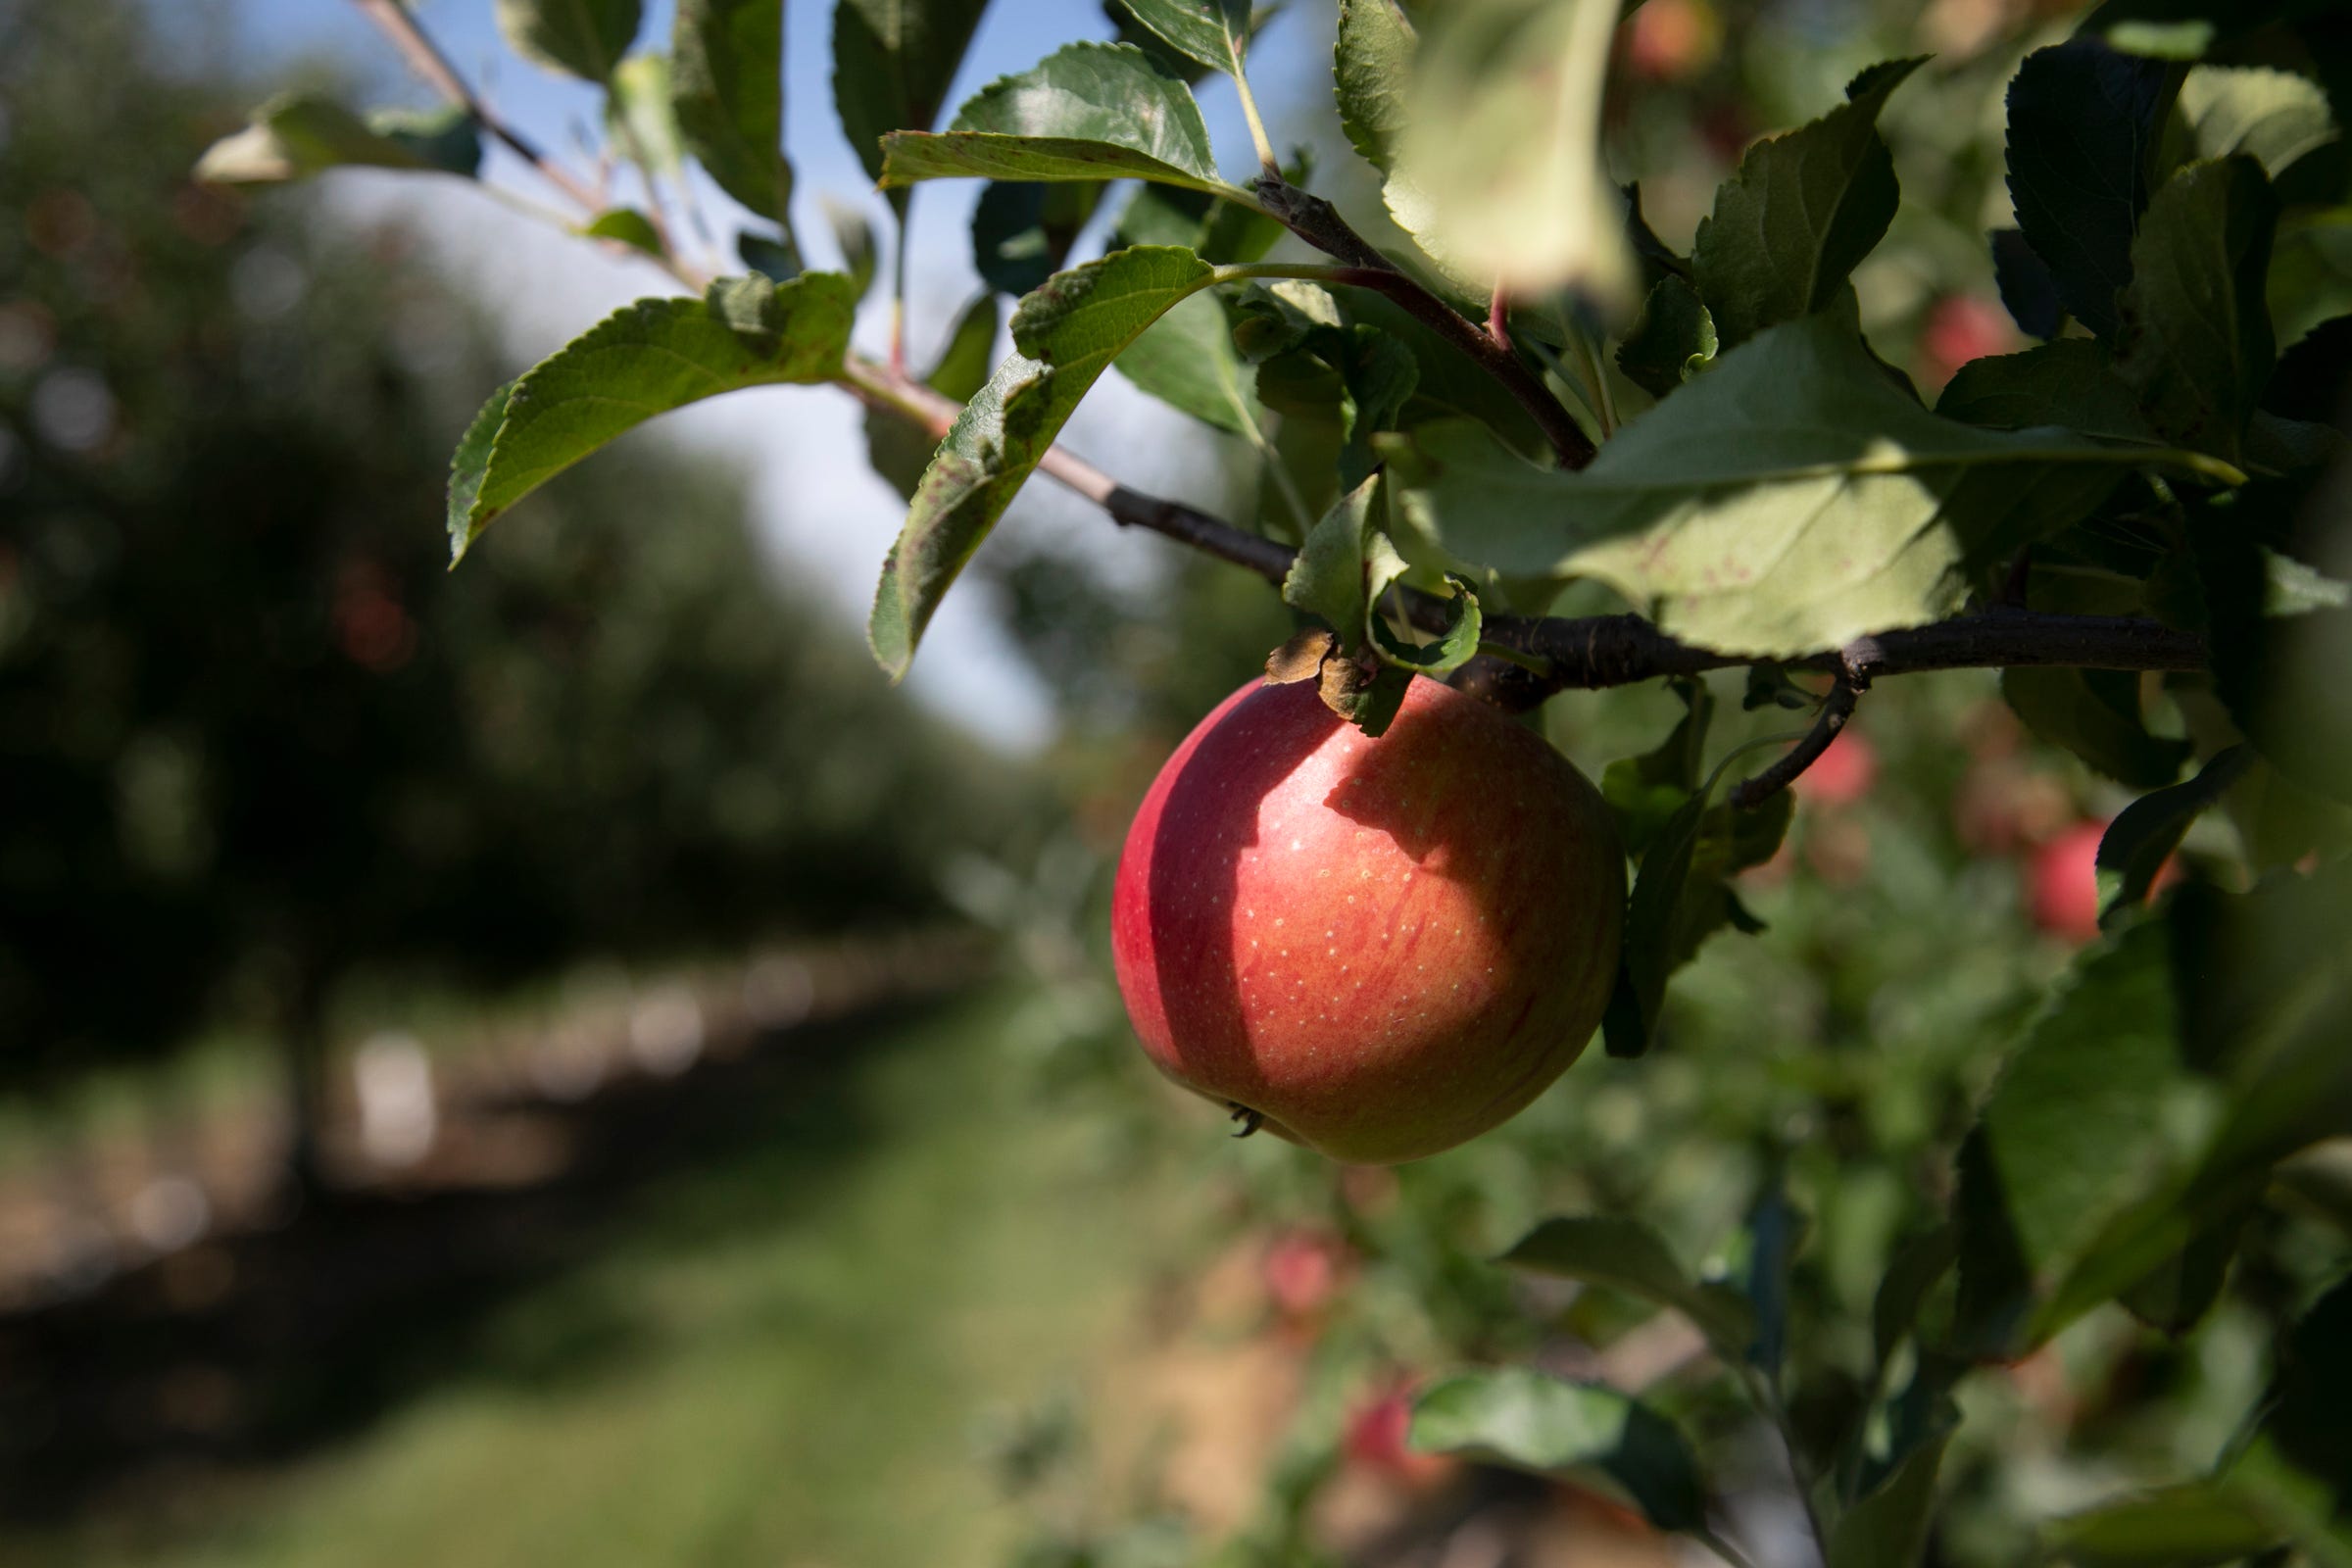 Honeycrisp Apples - Riveridge Produce Marketing, INC.